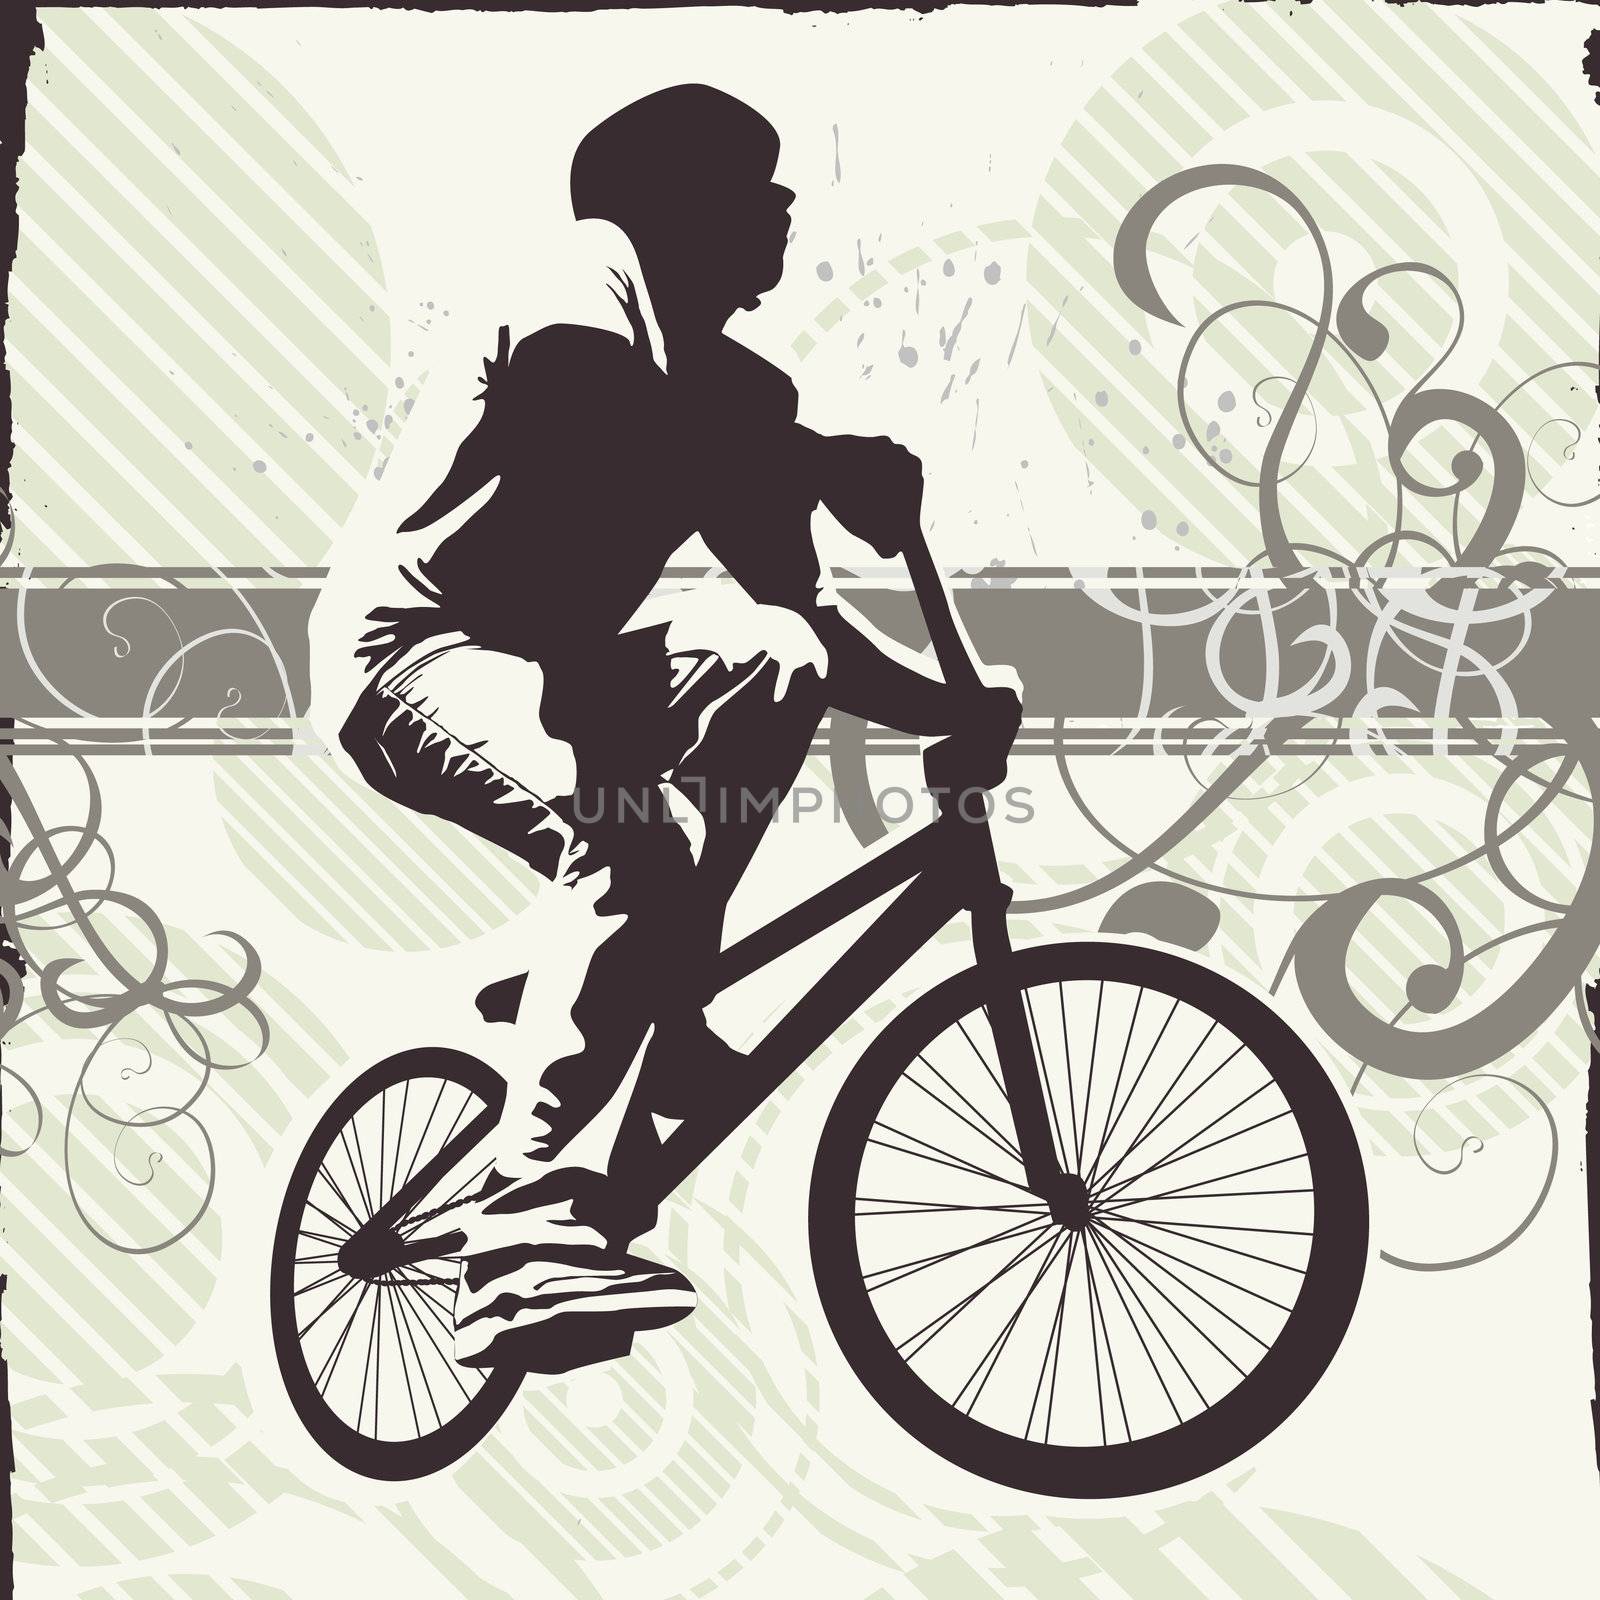 teen on bike (grunge and foliage version)